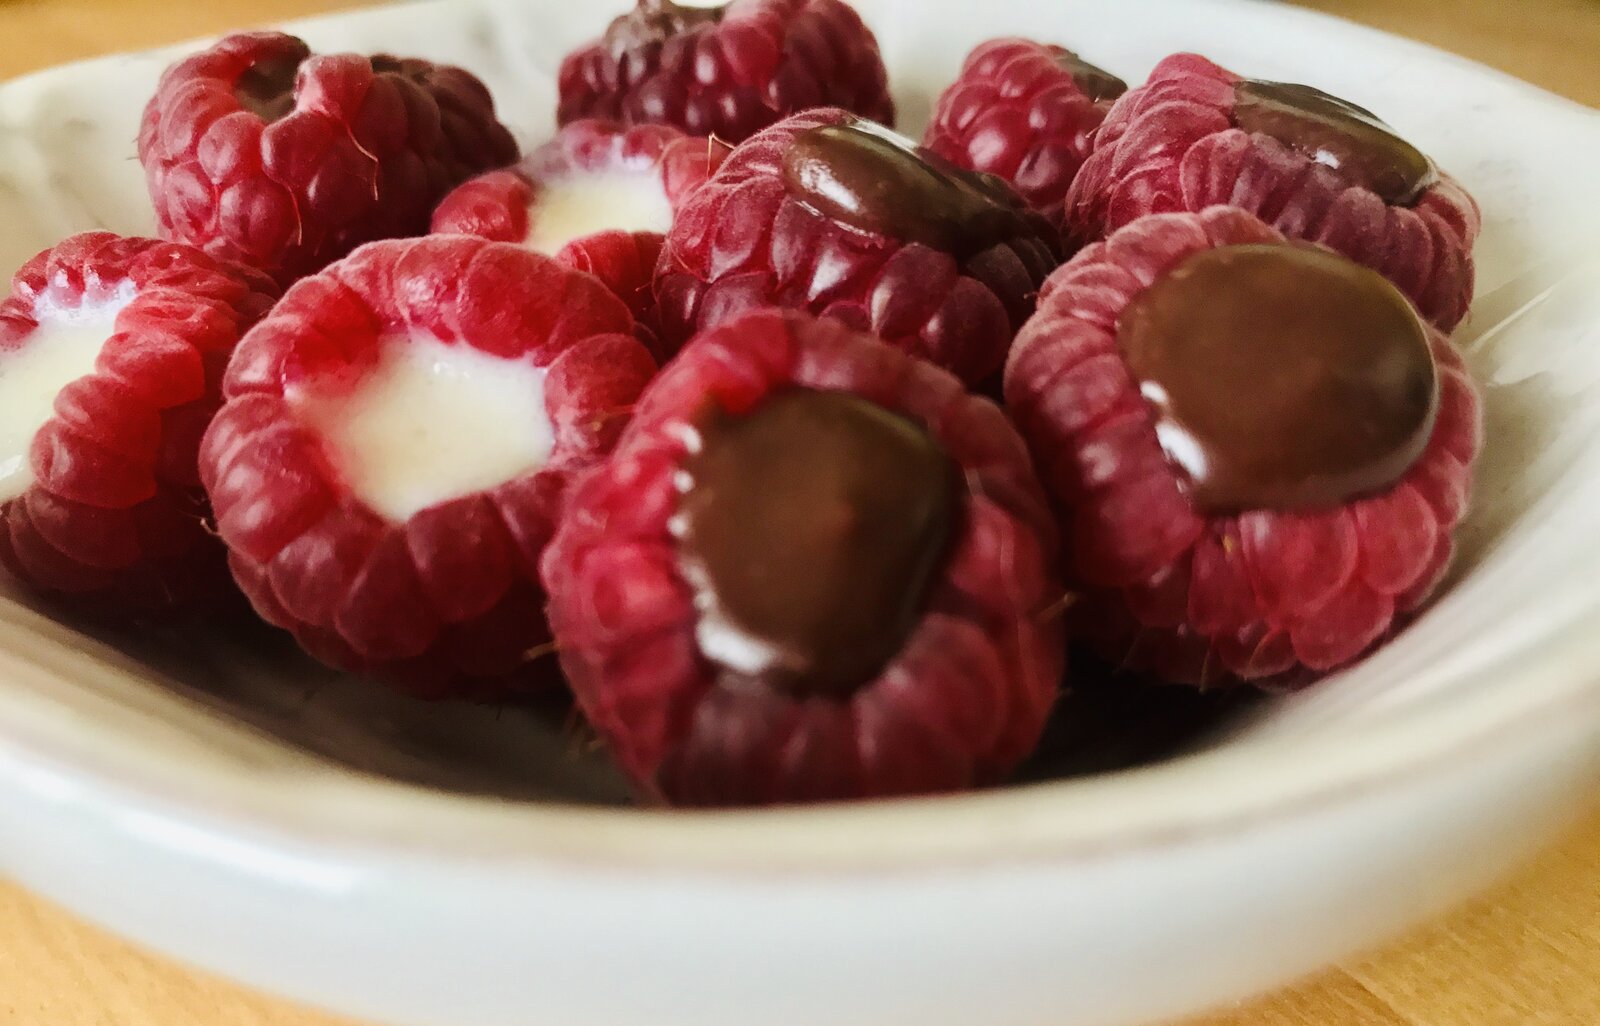 Chocolate-filled Raspberries.jpeg